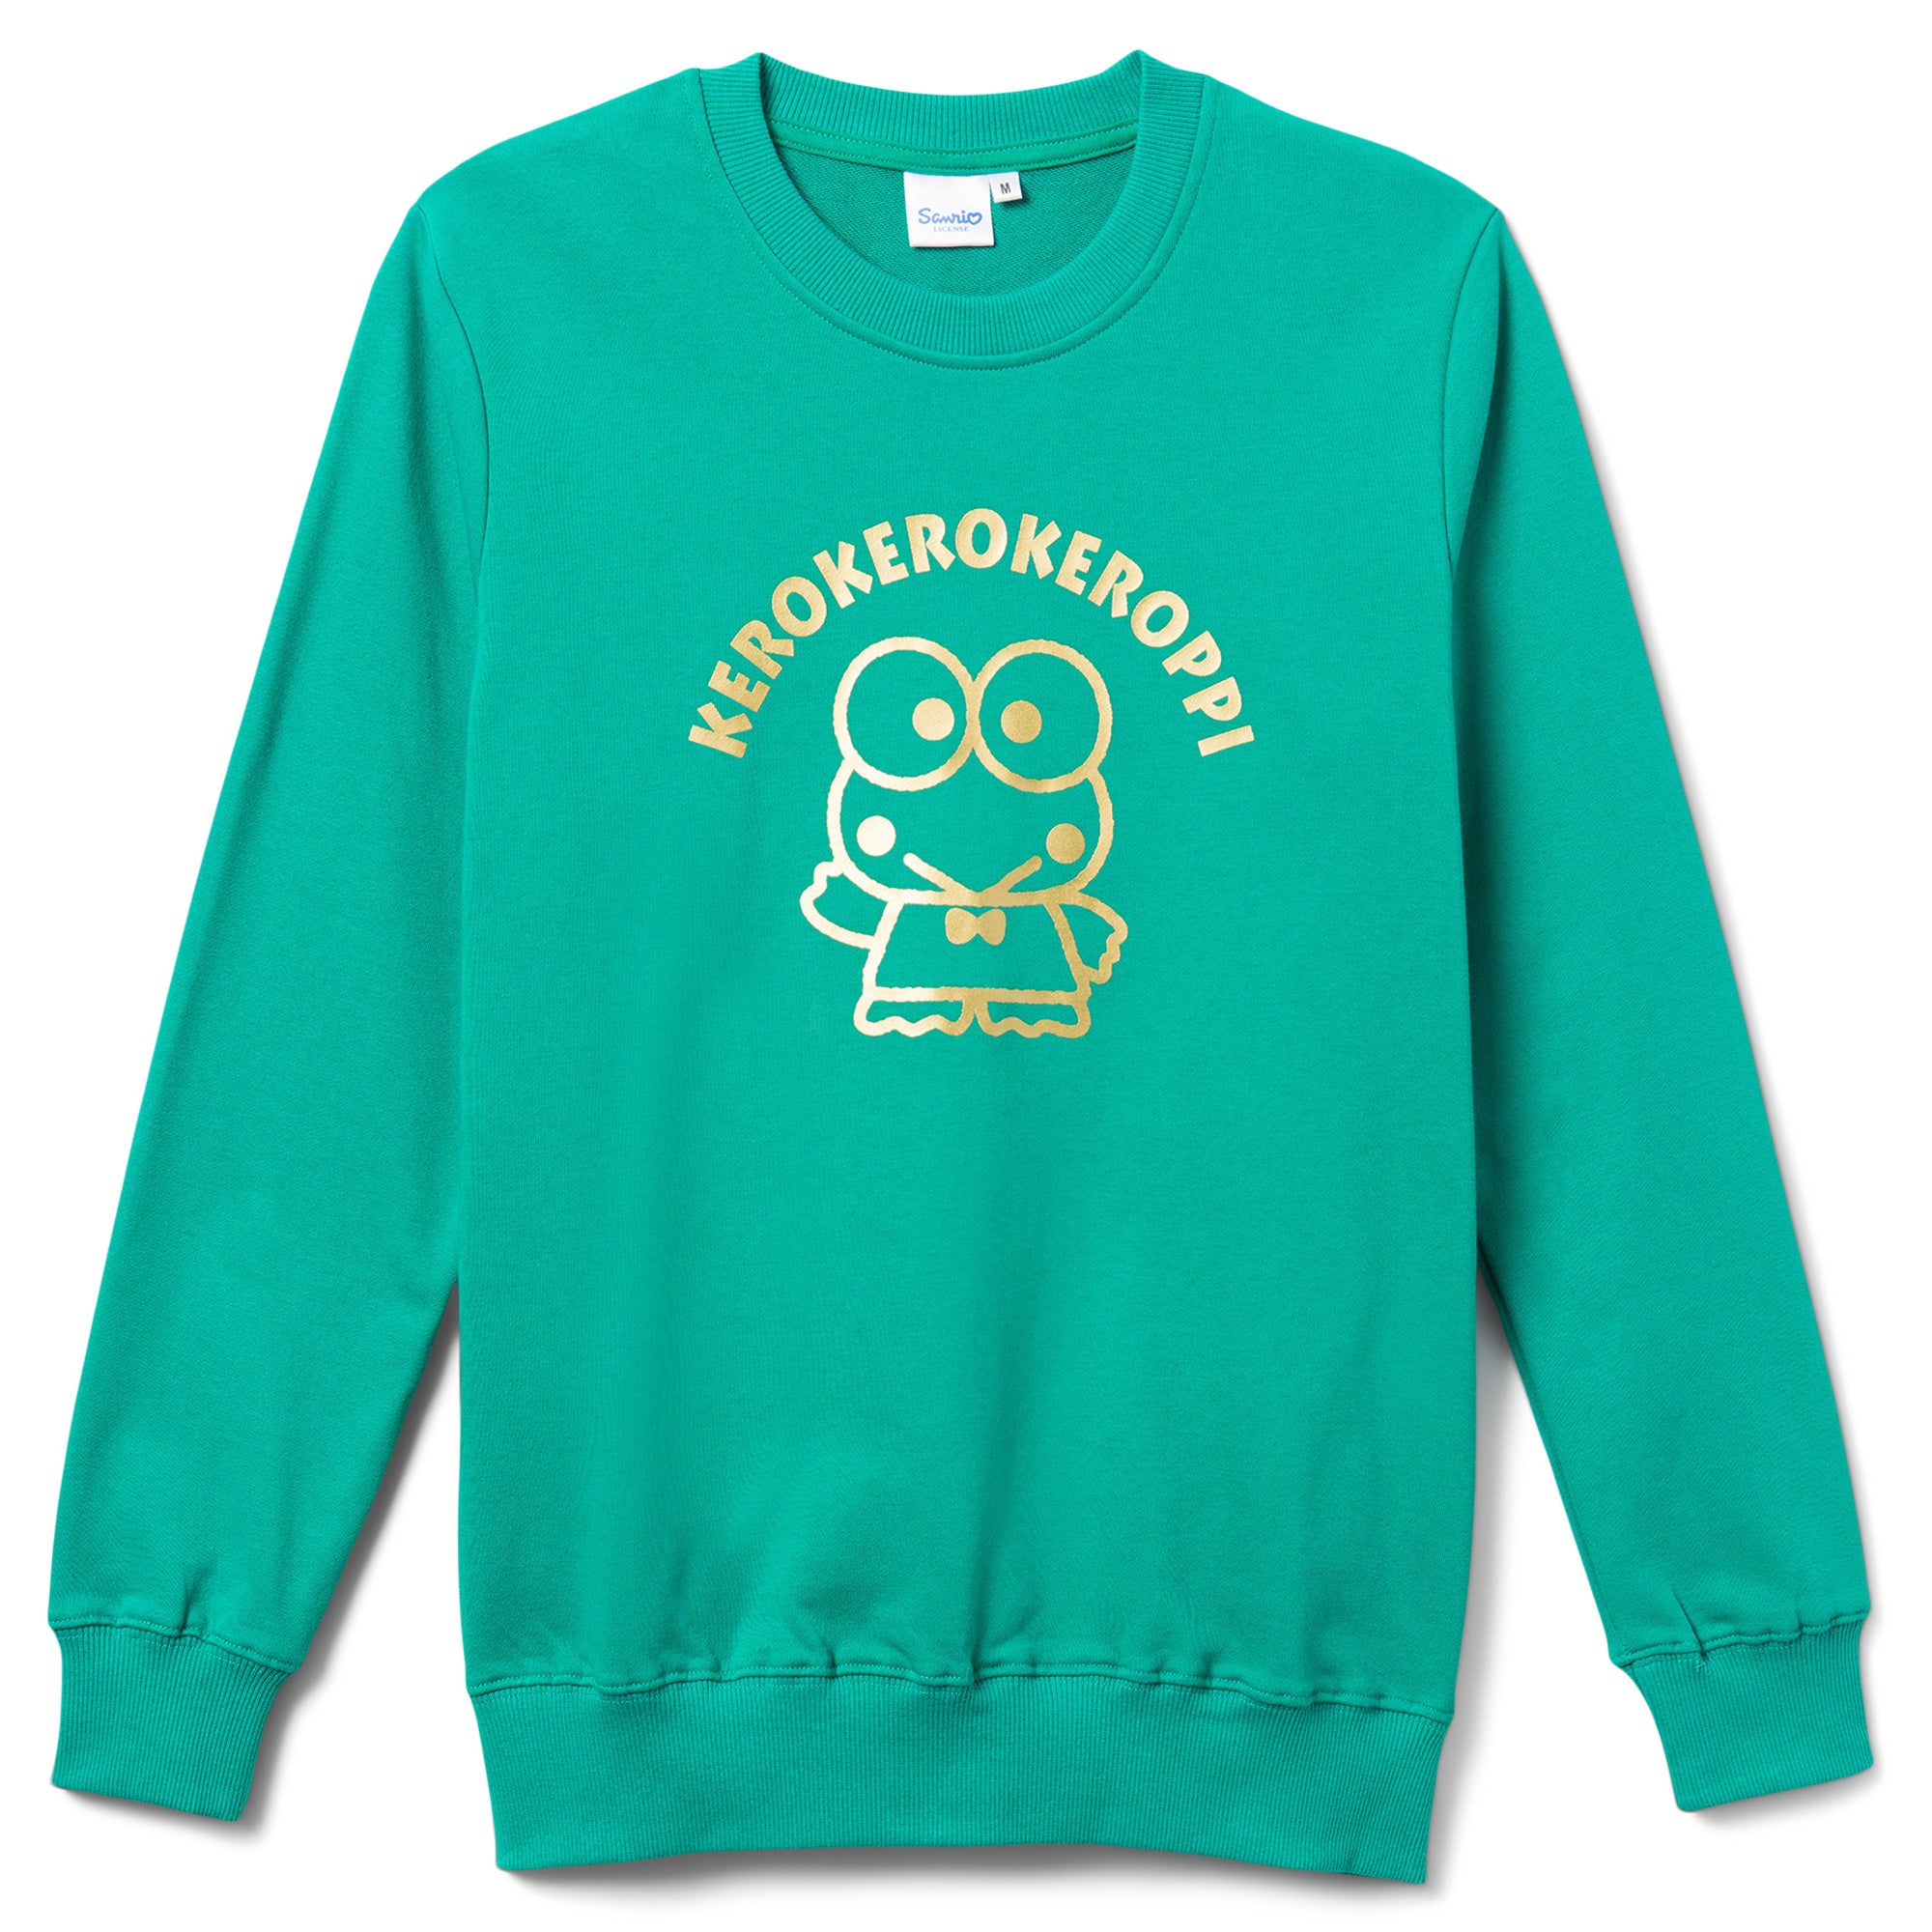 Keroppi Metallic Print Sweatshirt Green Apparel Global License   